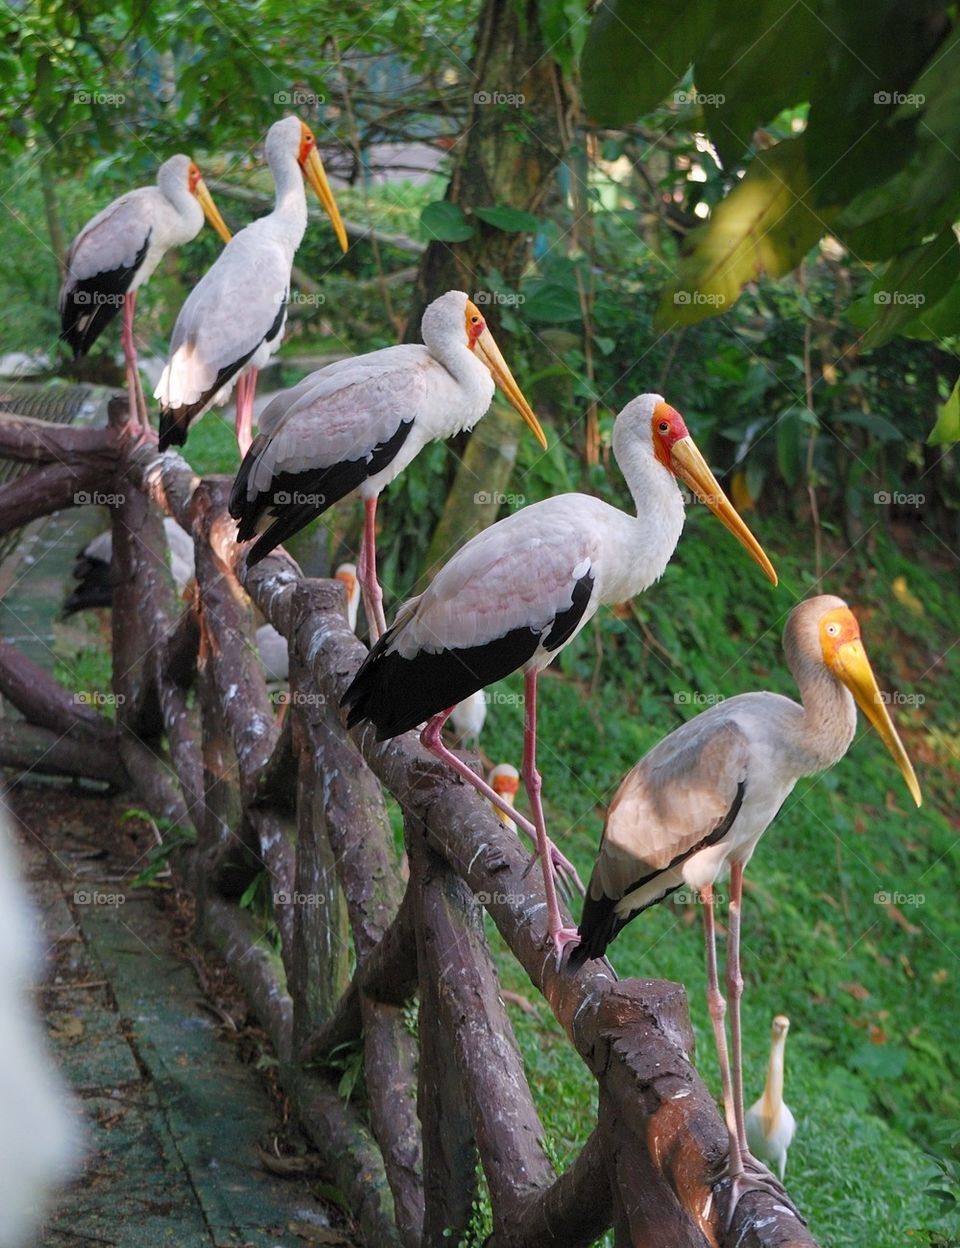 Painted Stork at Kuala Lumpur bird park